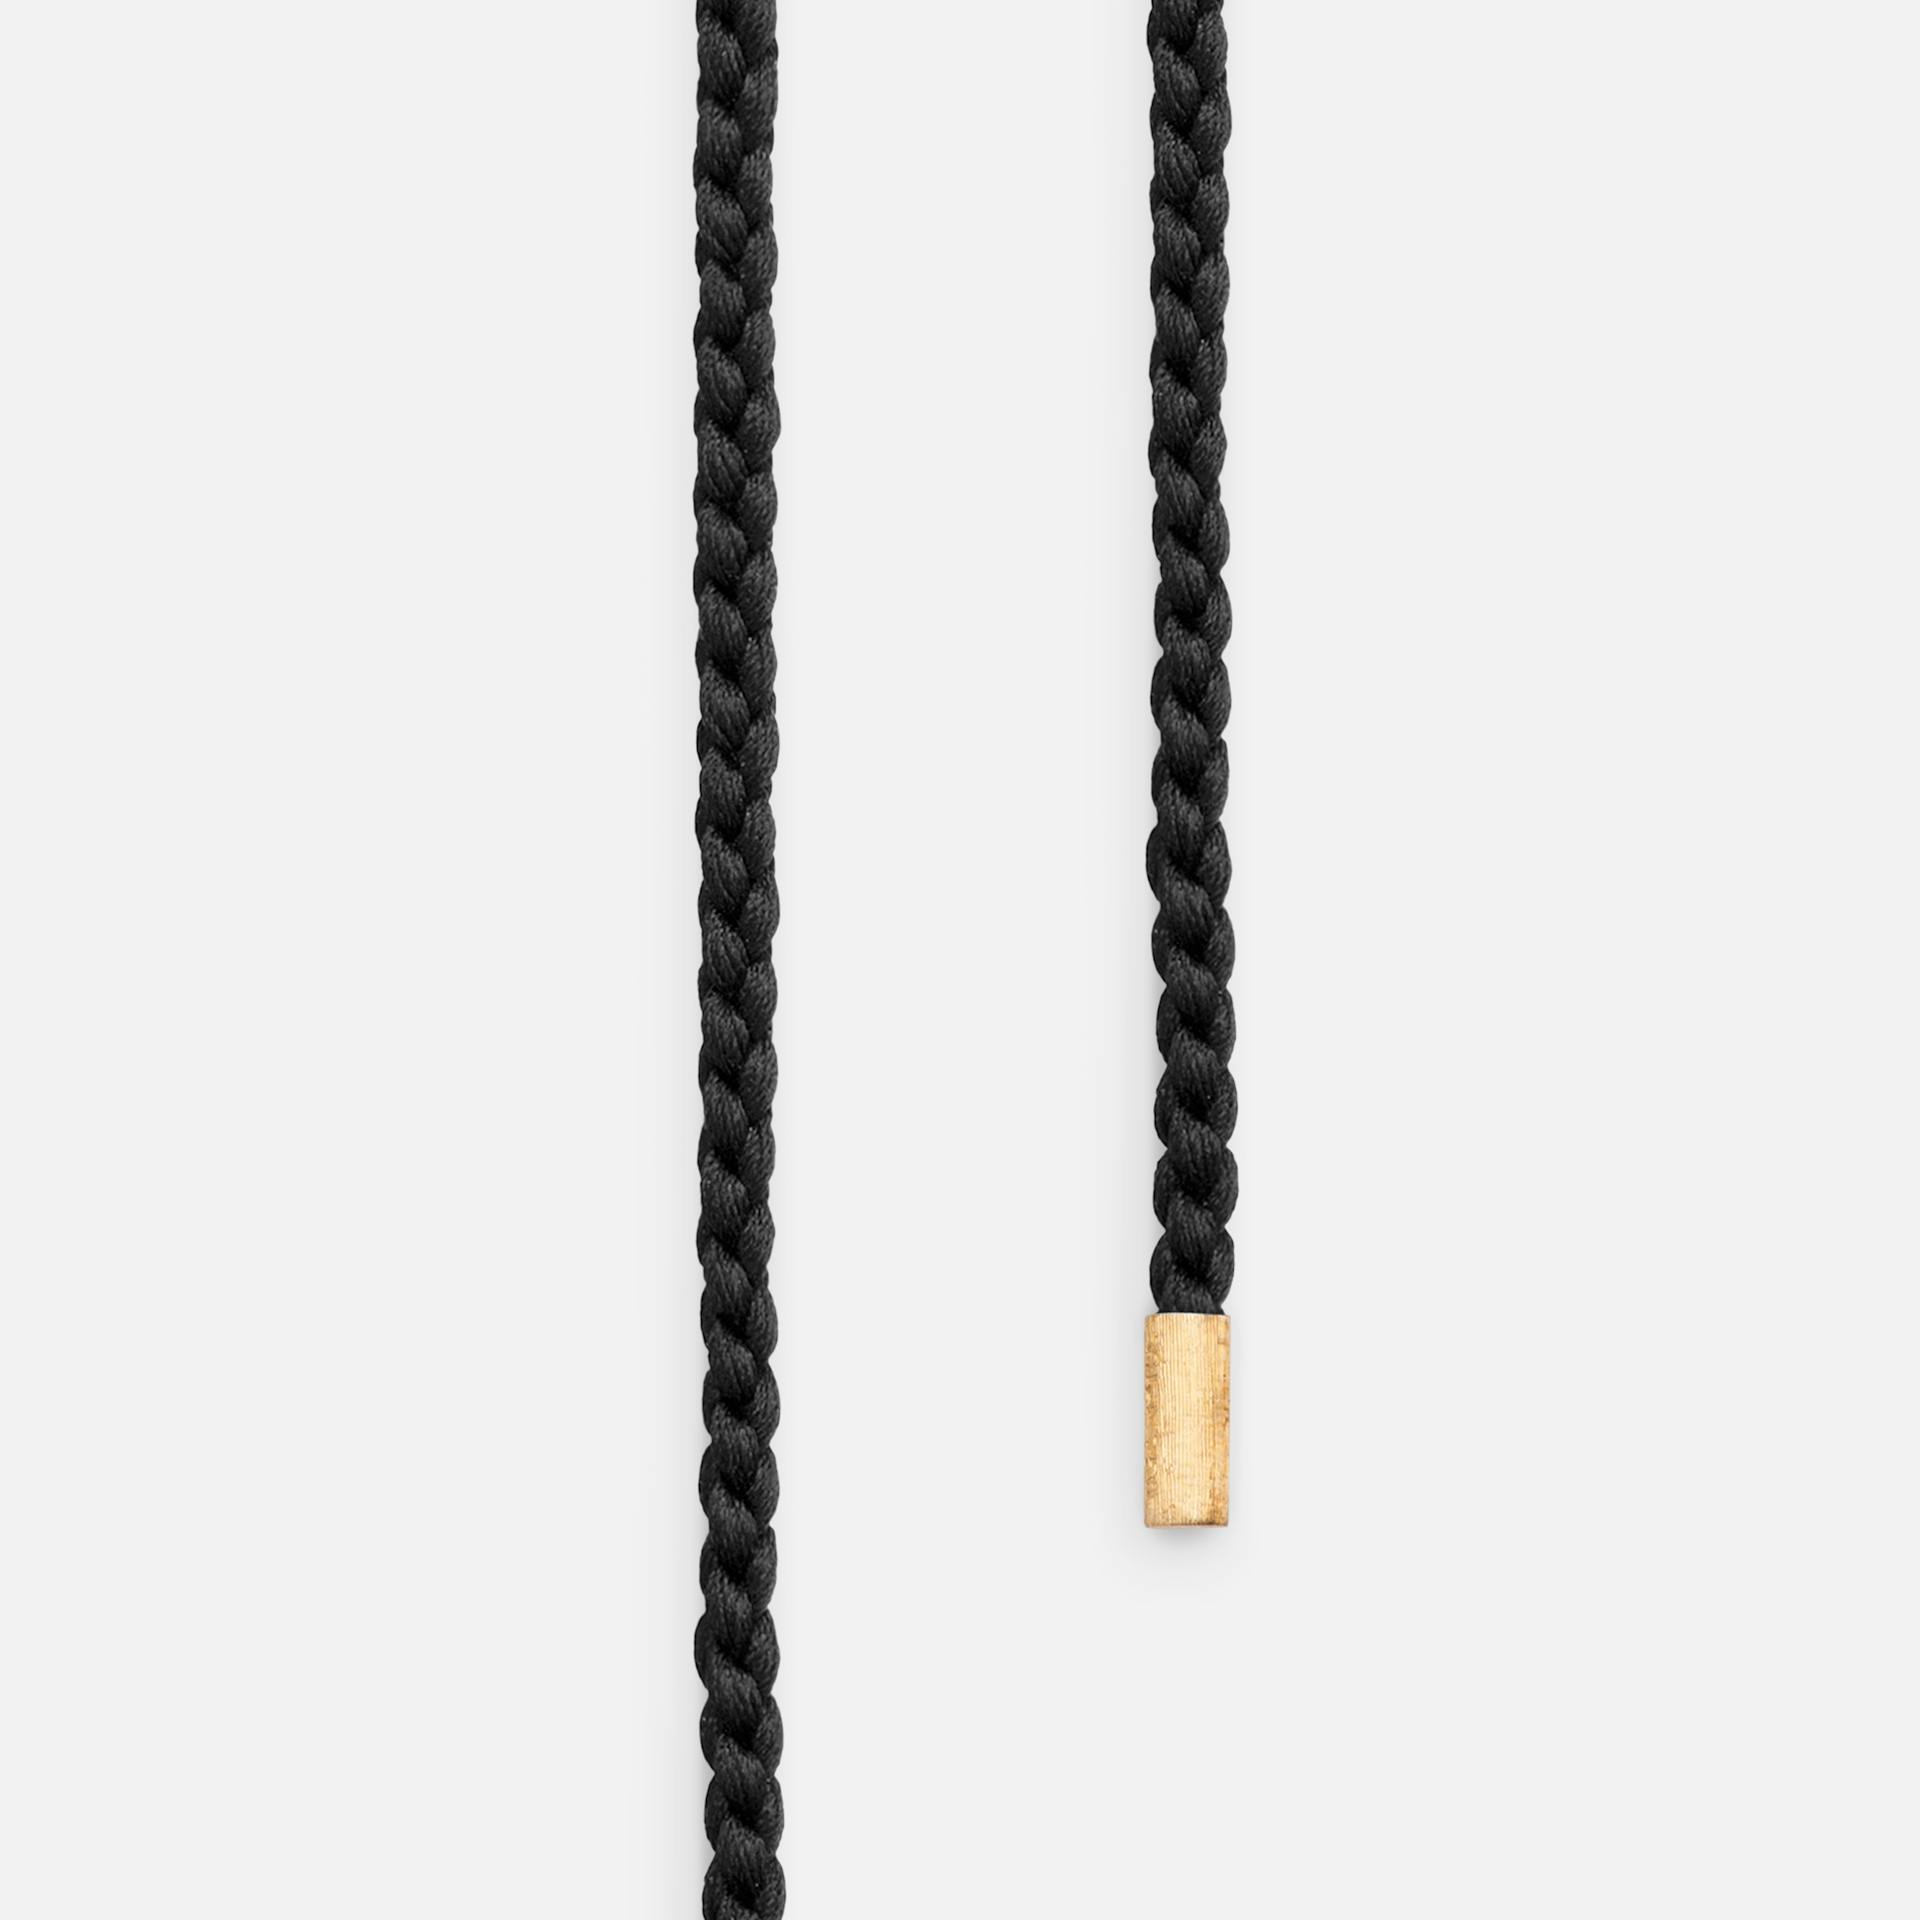 Mokuba Silk String Necklace with 18 Karat, Textured Yellow Gold End Pieces  |  Ole Lynggaard Copenhagen   